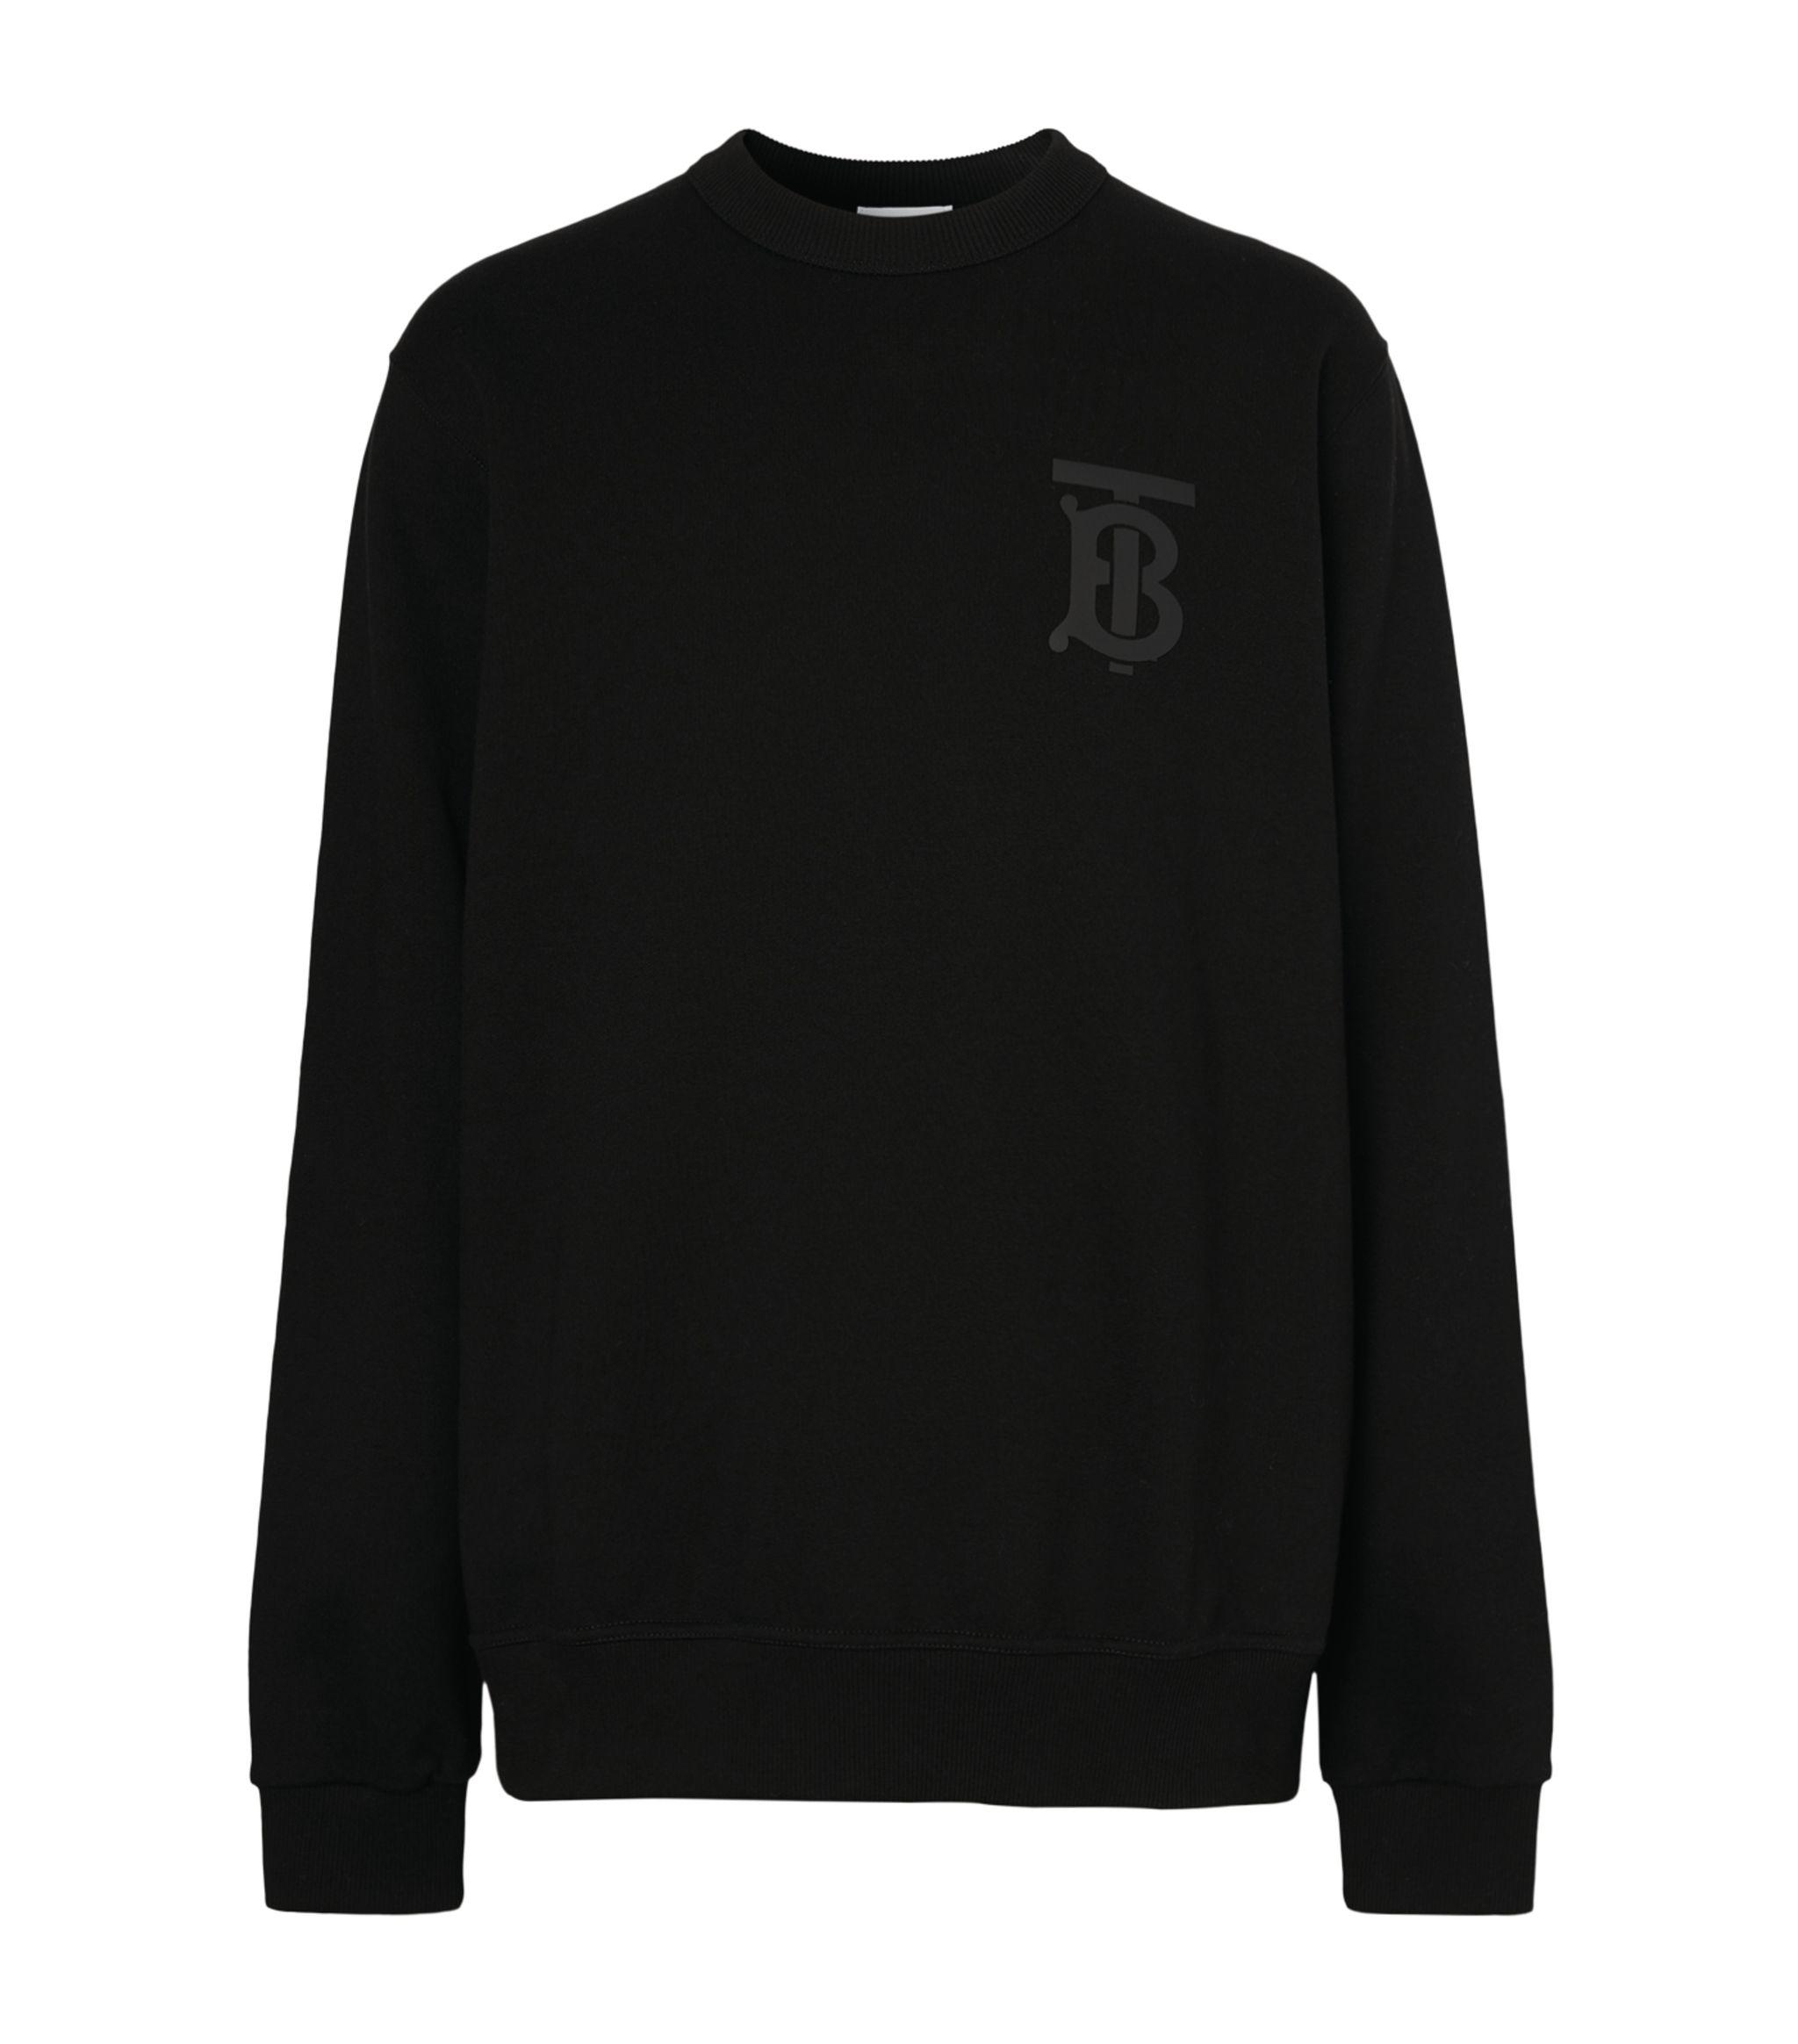 Burberry Cotton Tonal Tb Monogram Sweatshirt in Black for Men - Lyst